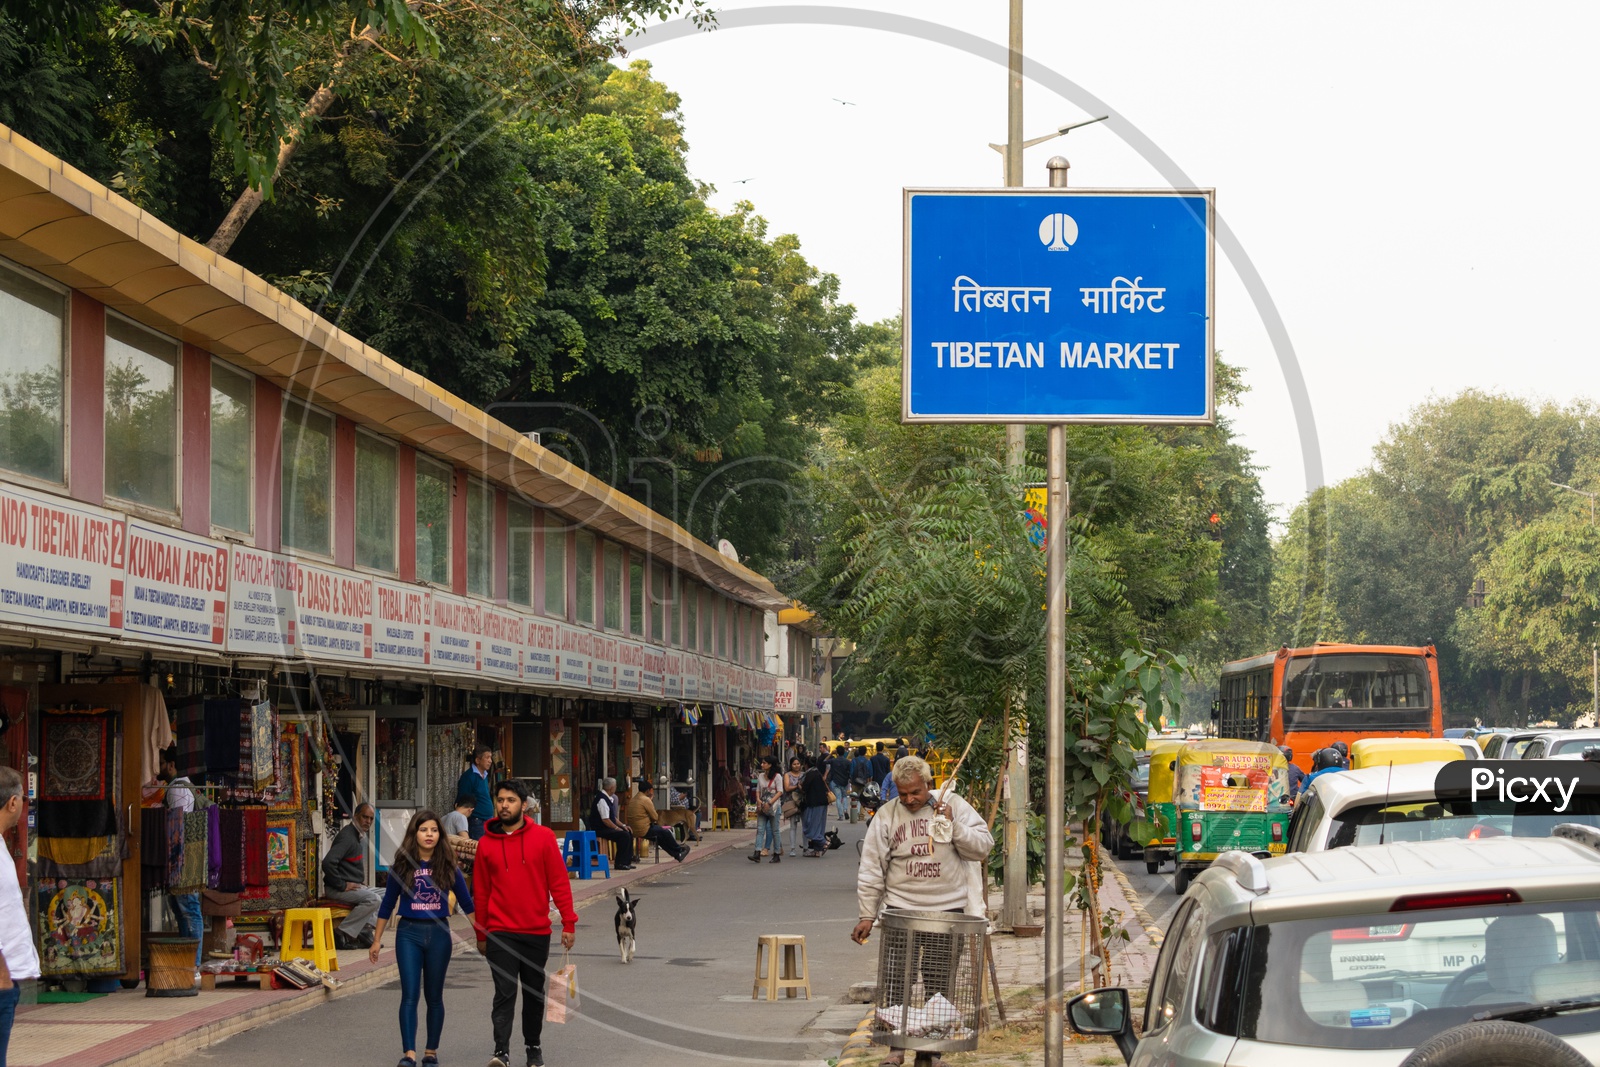 Tibetan market near Rajiv Chowk, Connaught Place